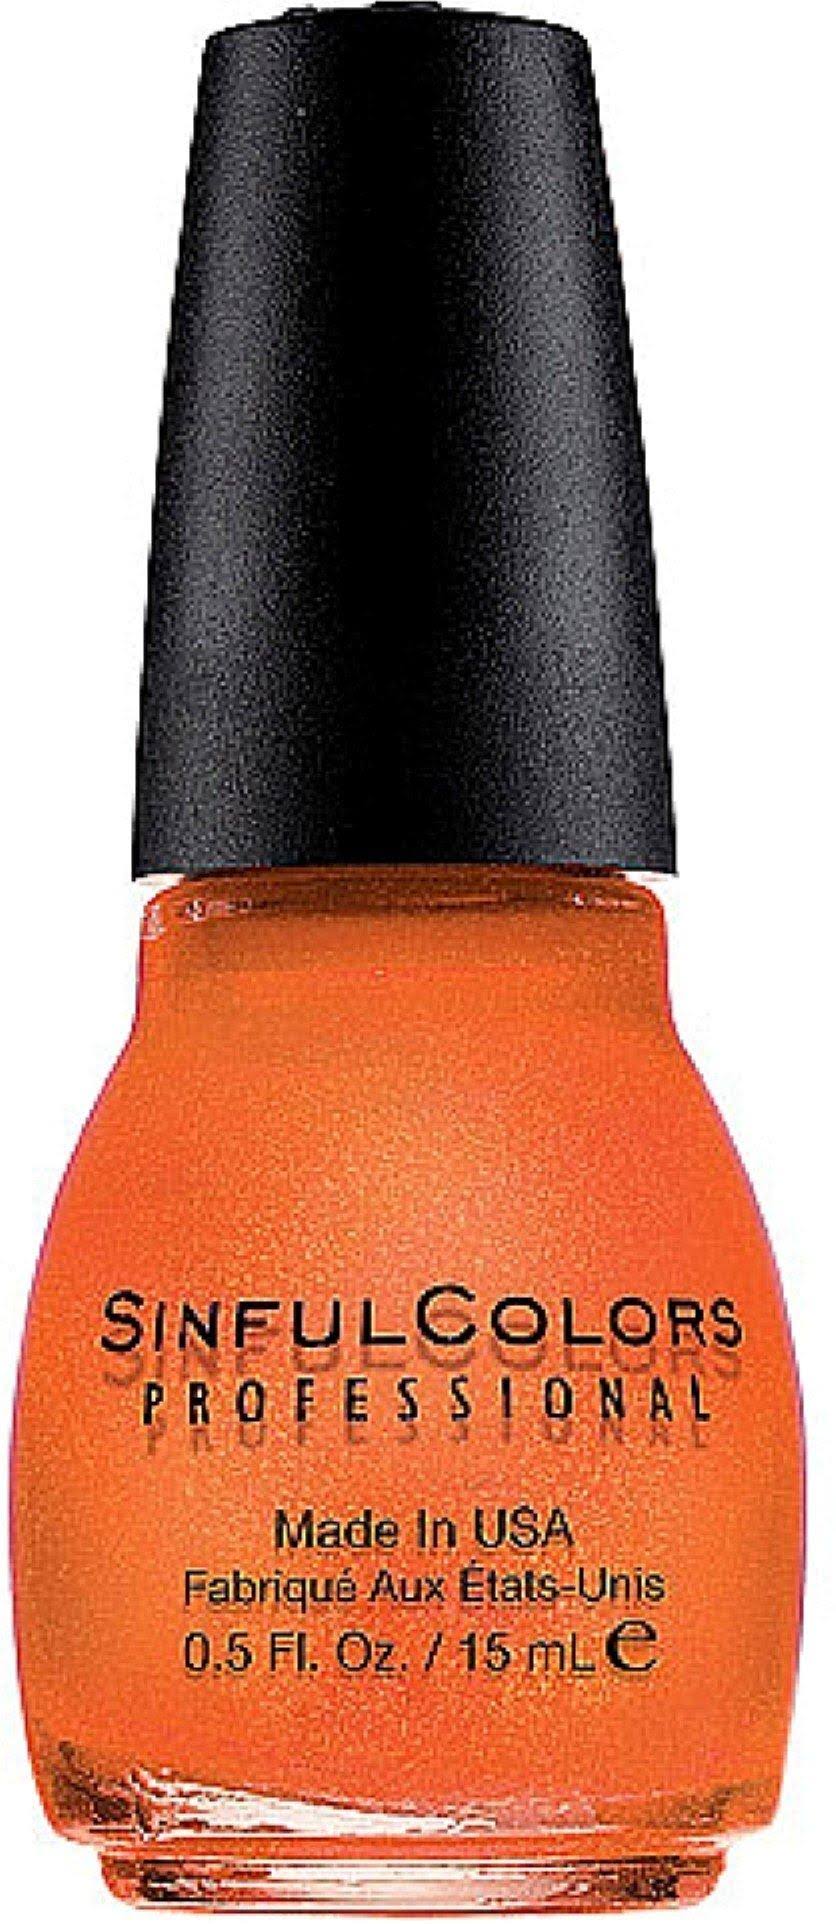 Sinful Colors Professional Nail Enamel - 853 Cloud 9 Orange, 0.5oz